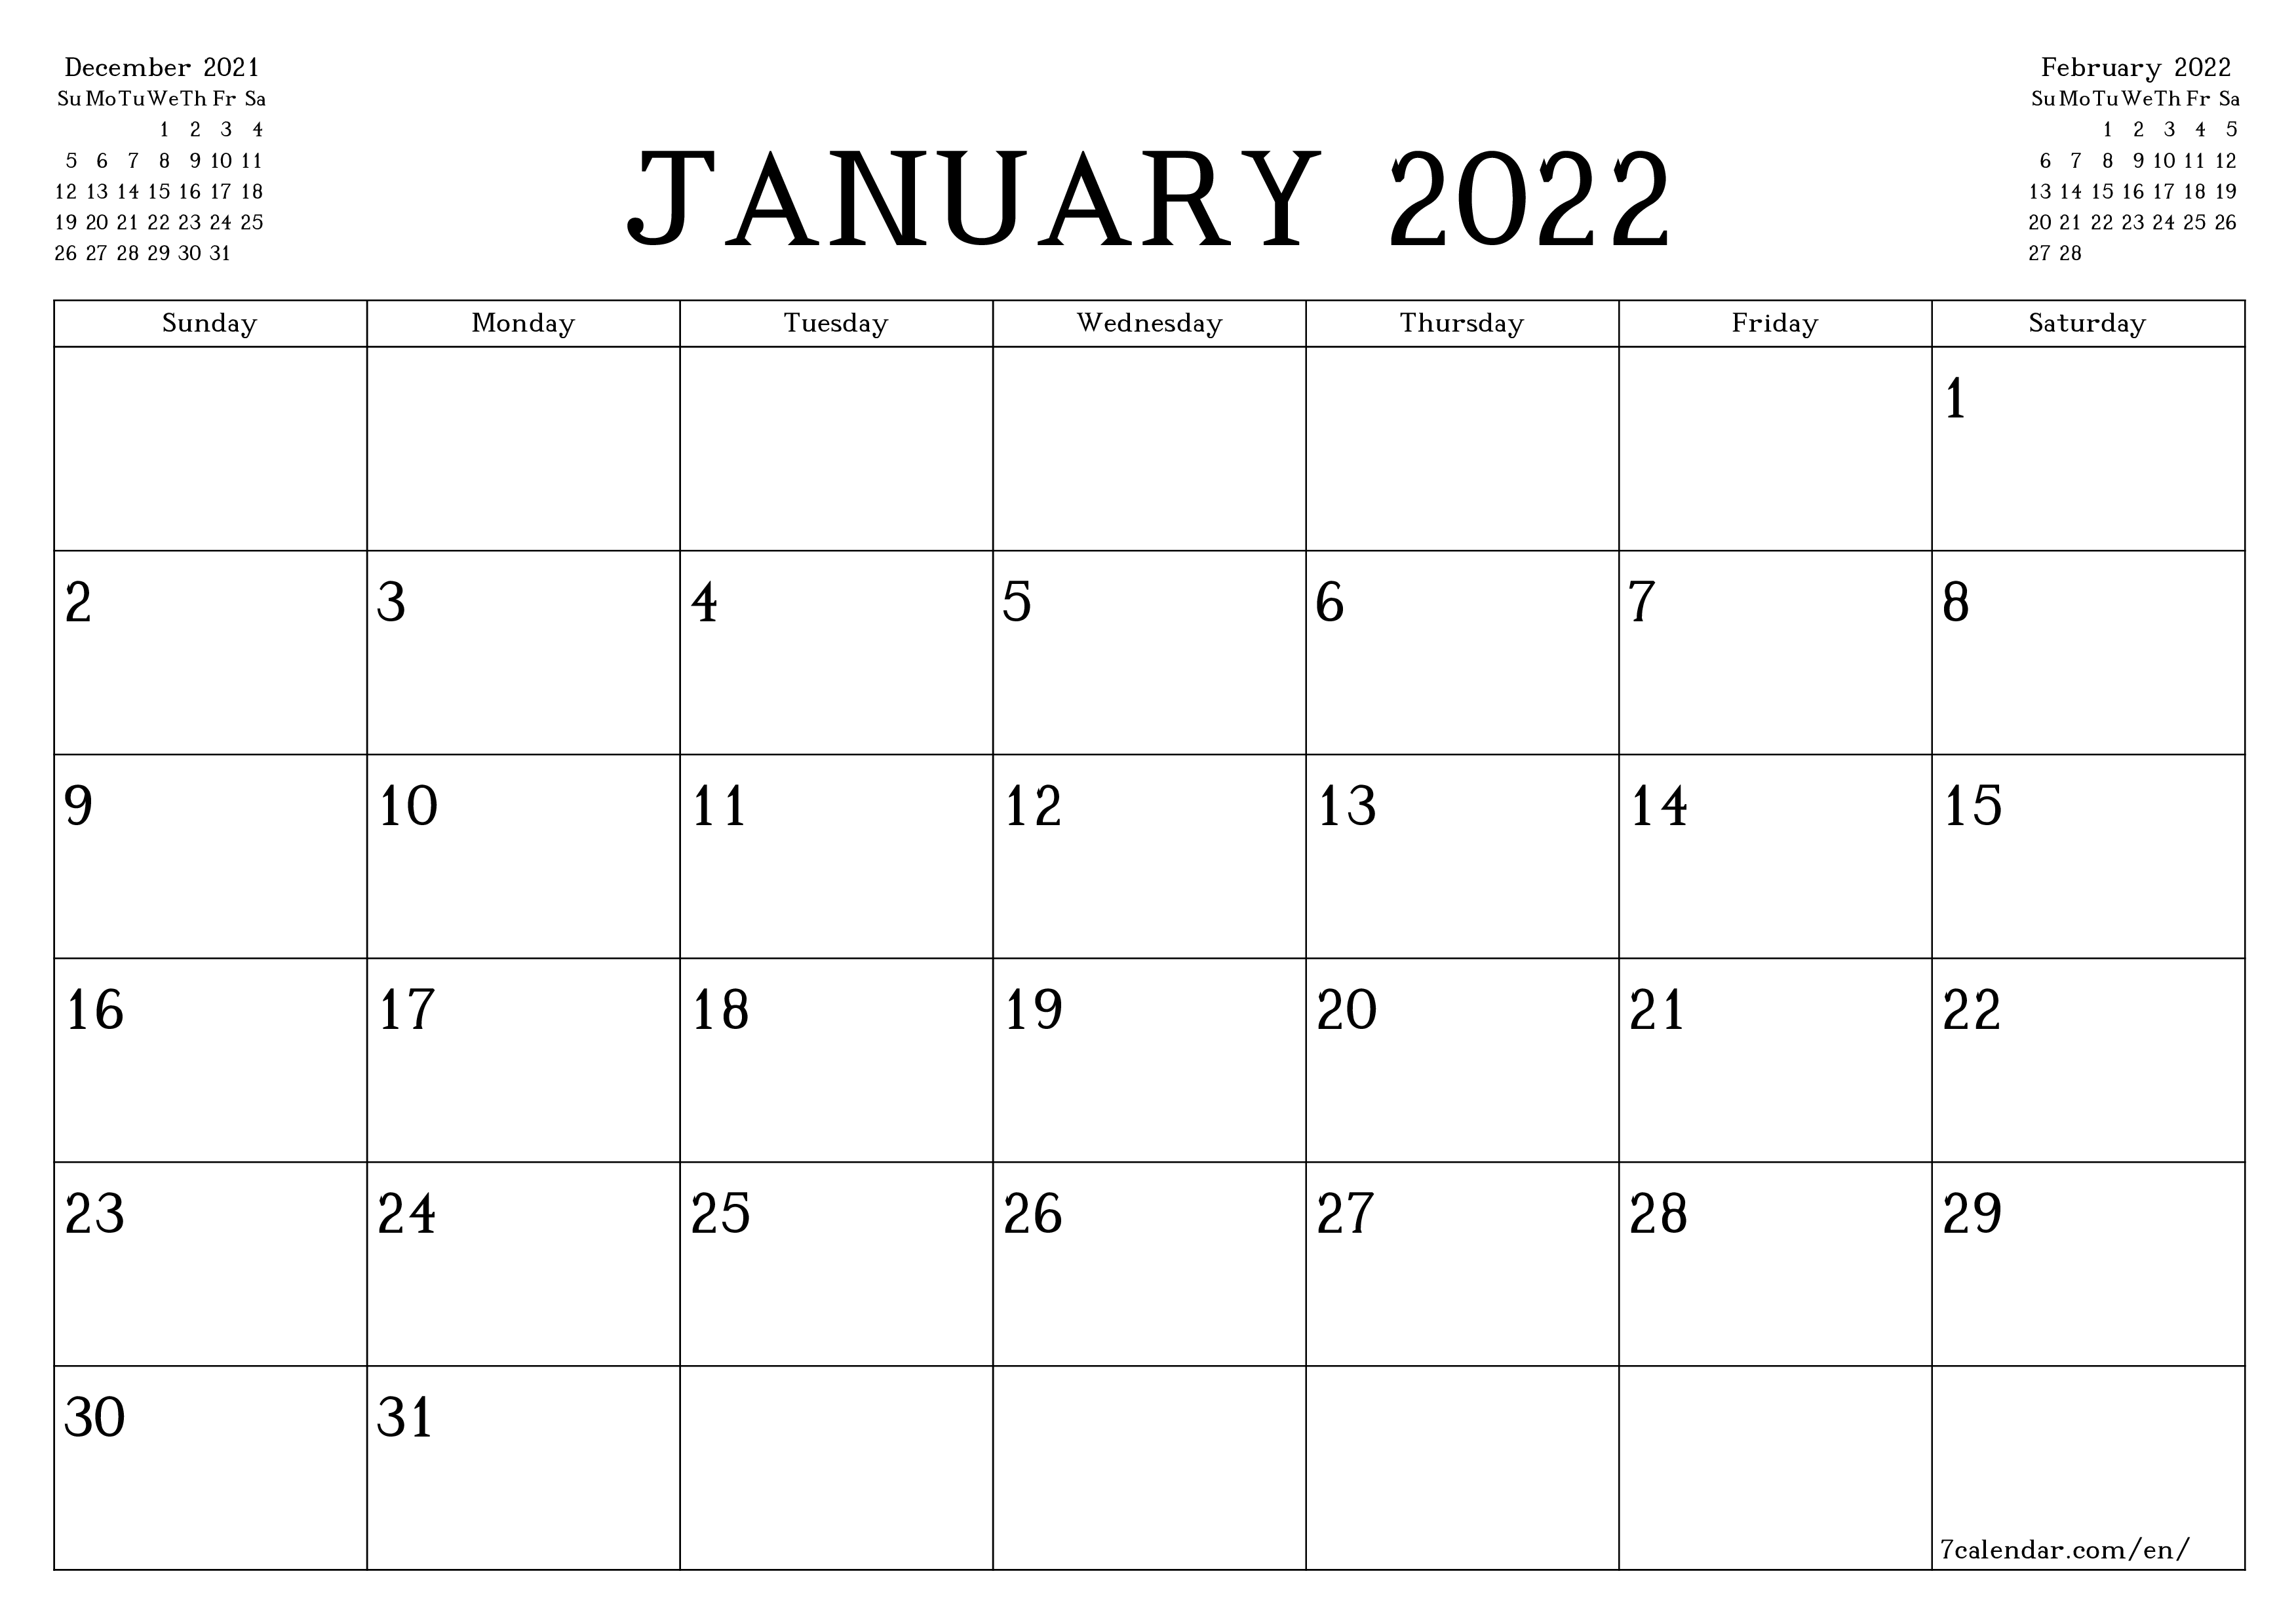 November December January 2022 Calendar January 2022 Free Printable Calendars And Planners, Pdf Templates -  7Calendar